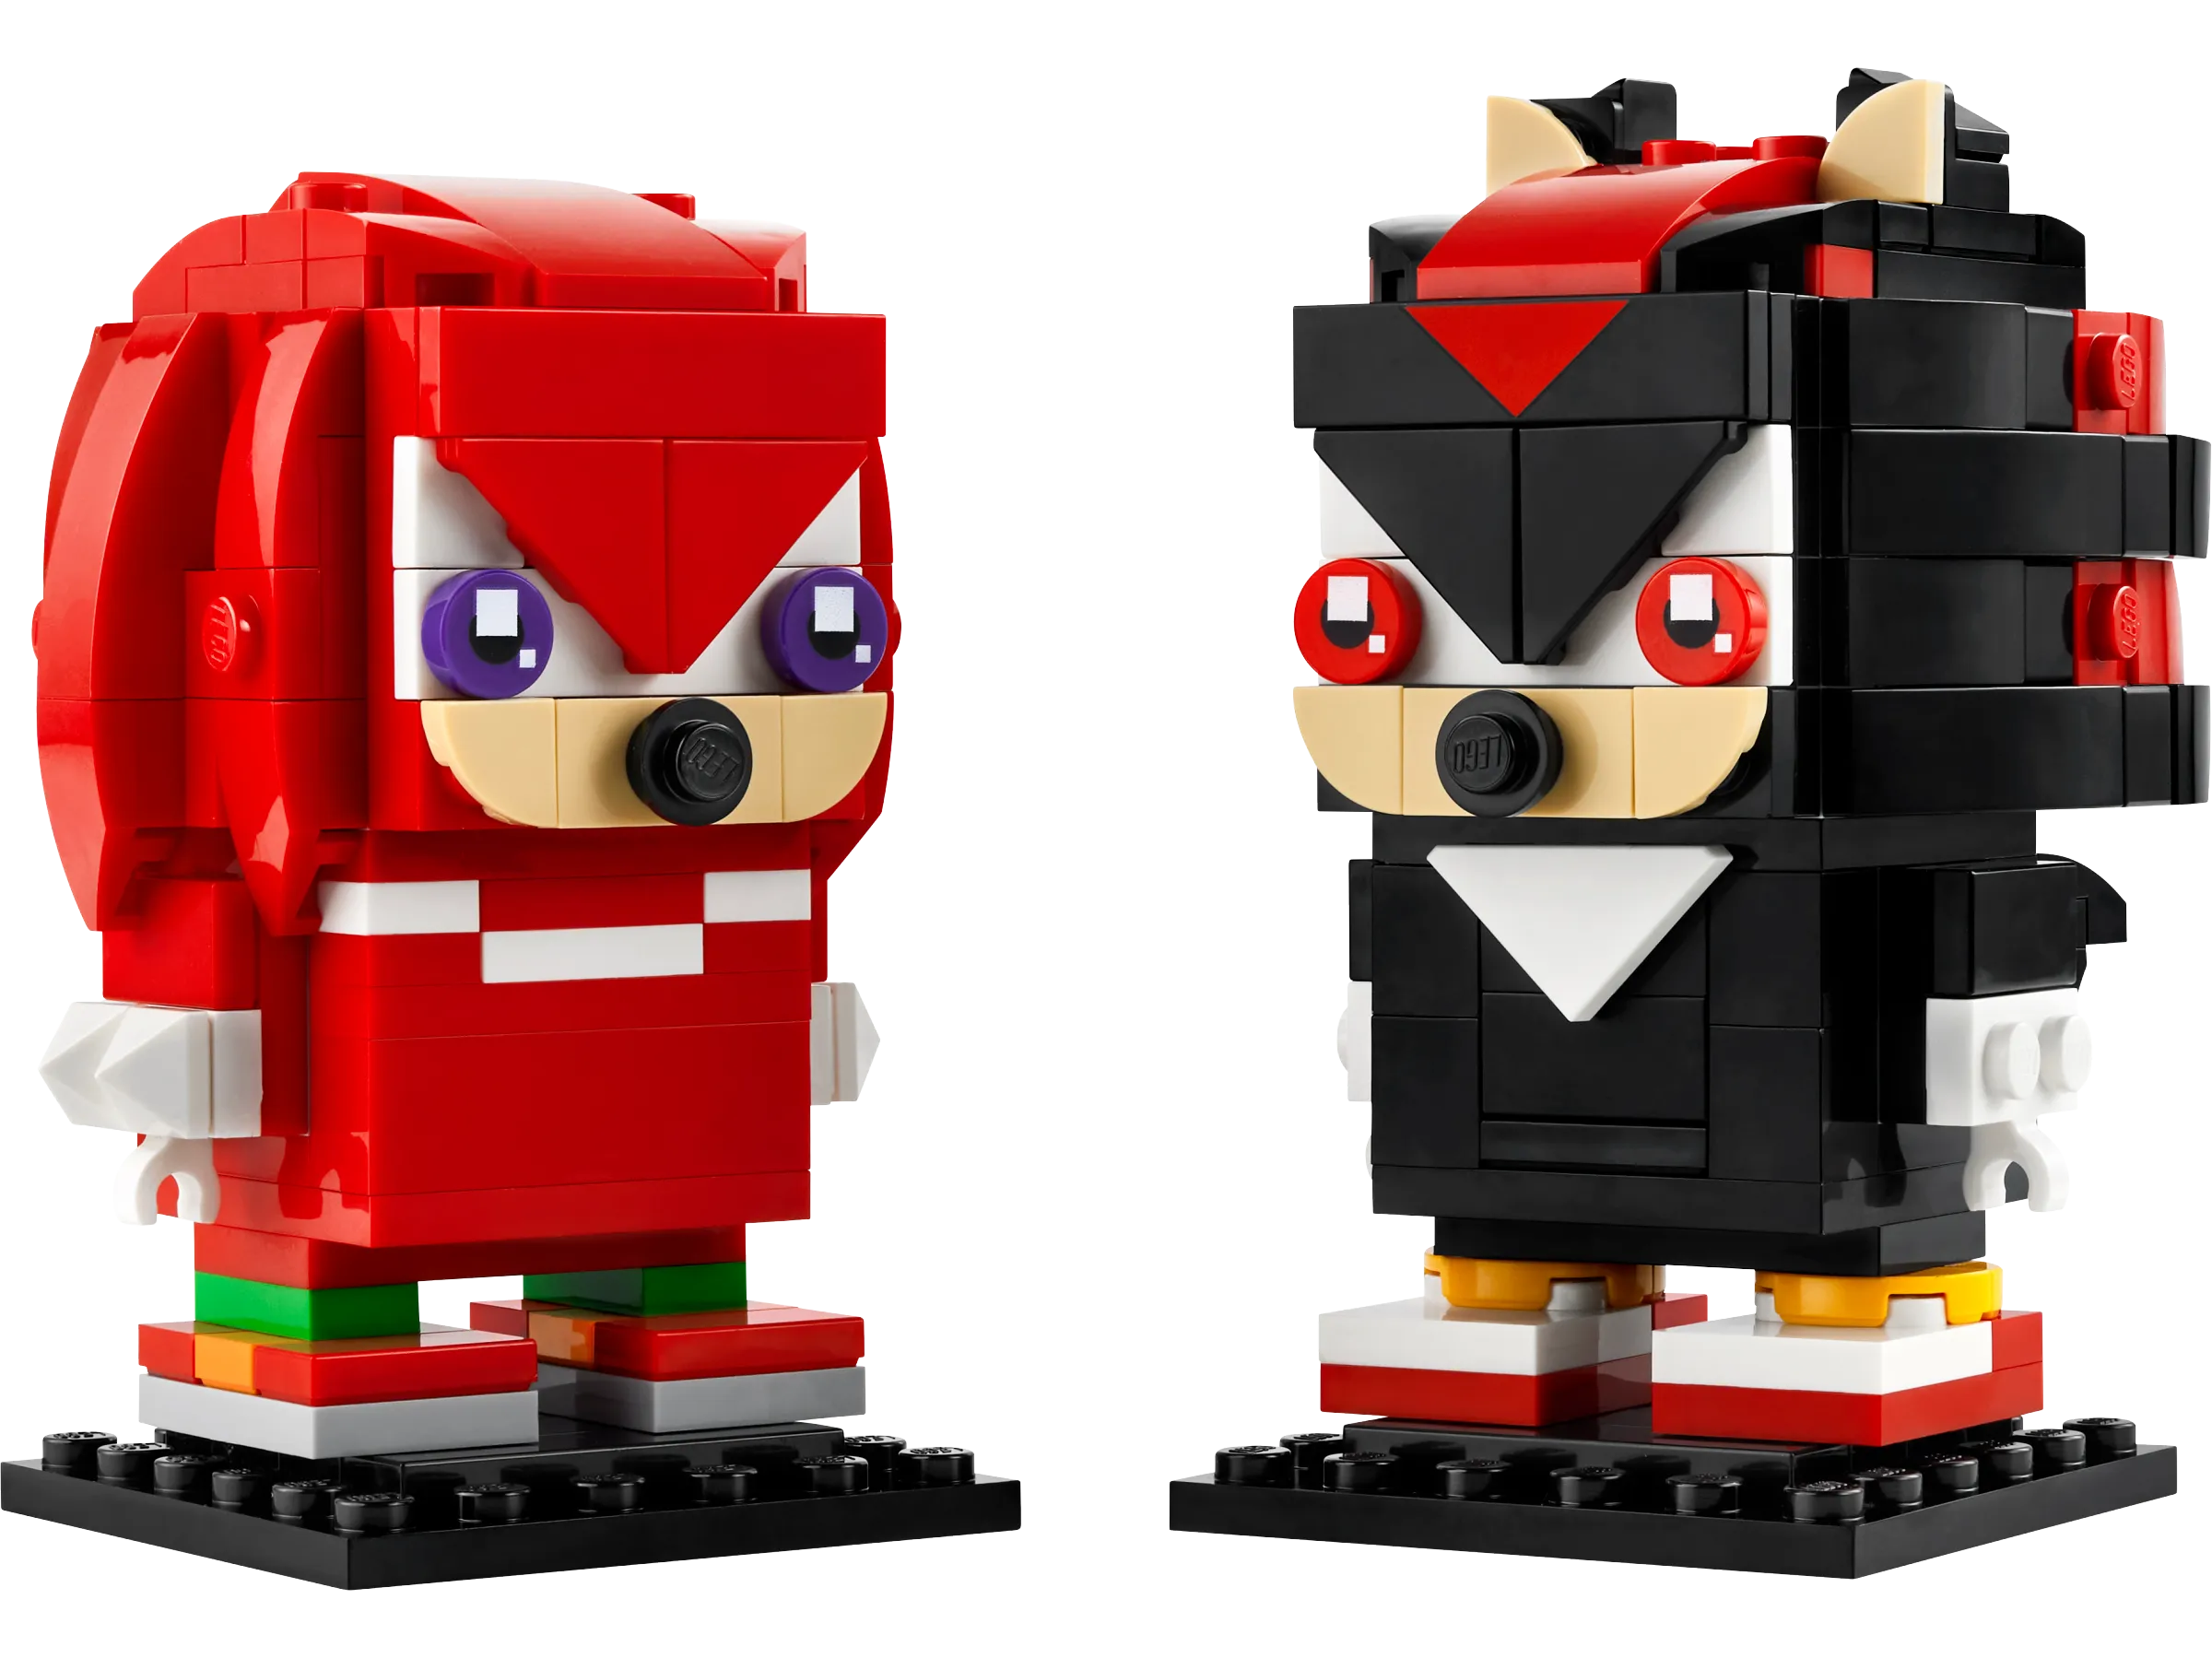 Knuckles' Guardian Mech 76996, LEGO® Sonic the Hedgehog™